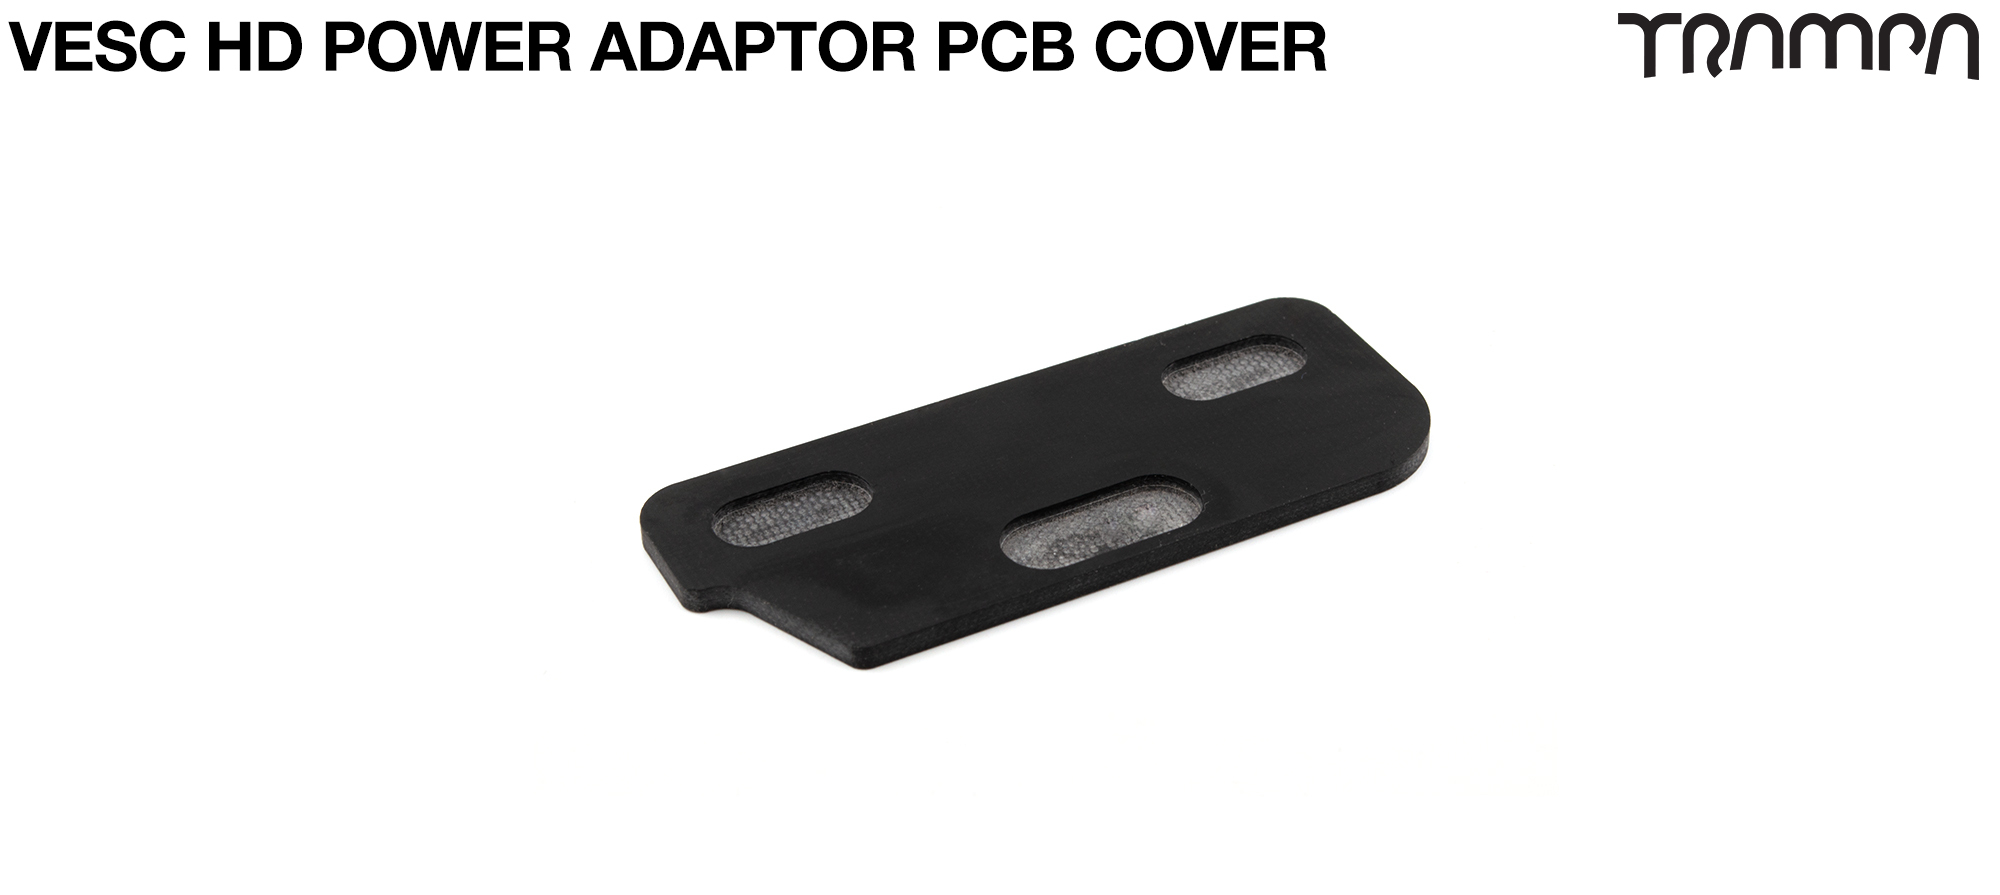 VESC HD Power Adaptor PCB Cover